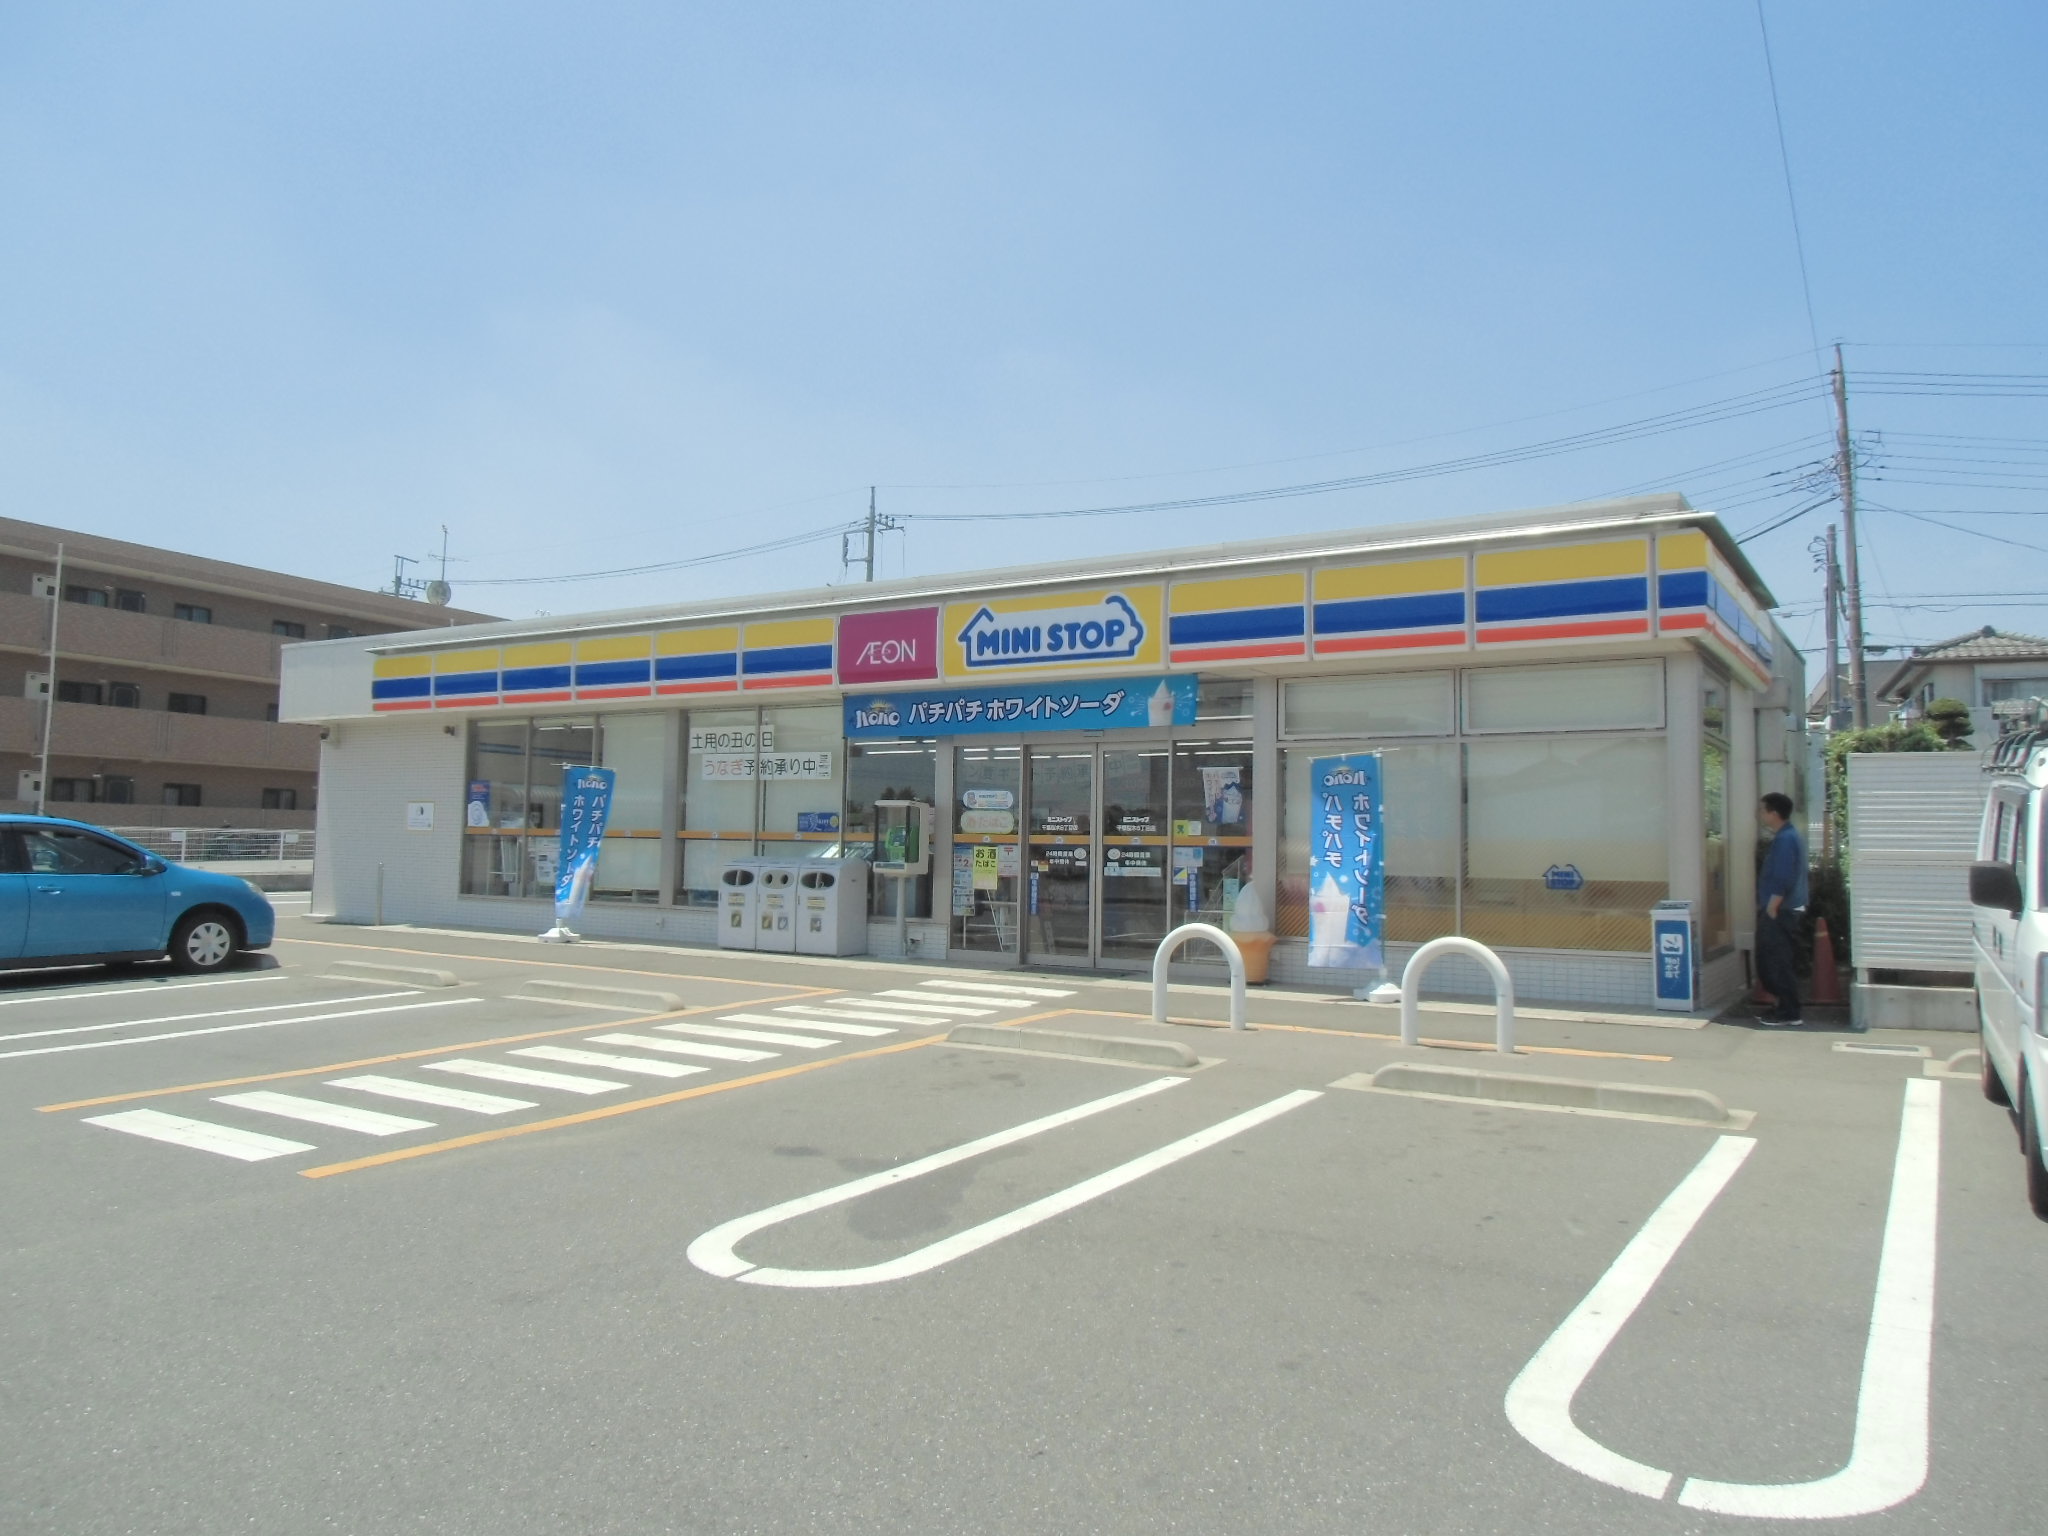 Convenience store. MINISTOP Chiba Sakuragi 6-chome up (convenience store) 112m